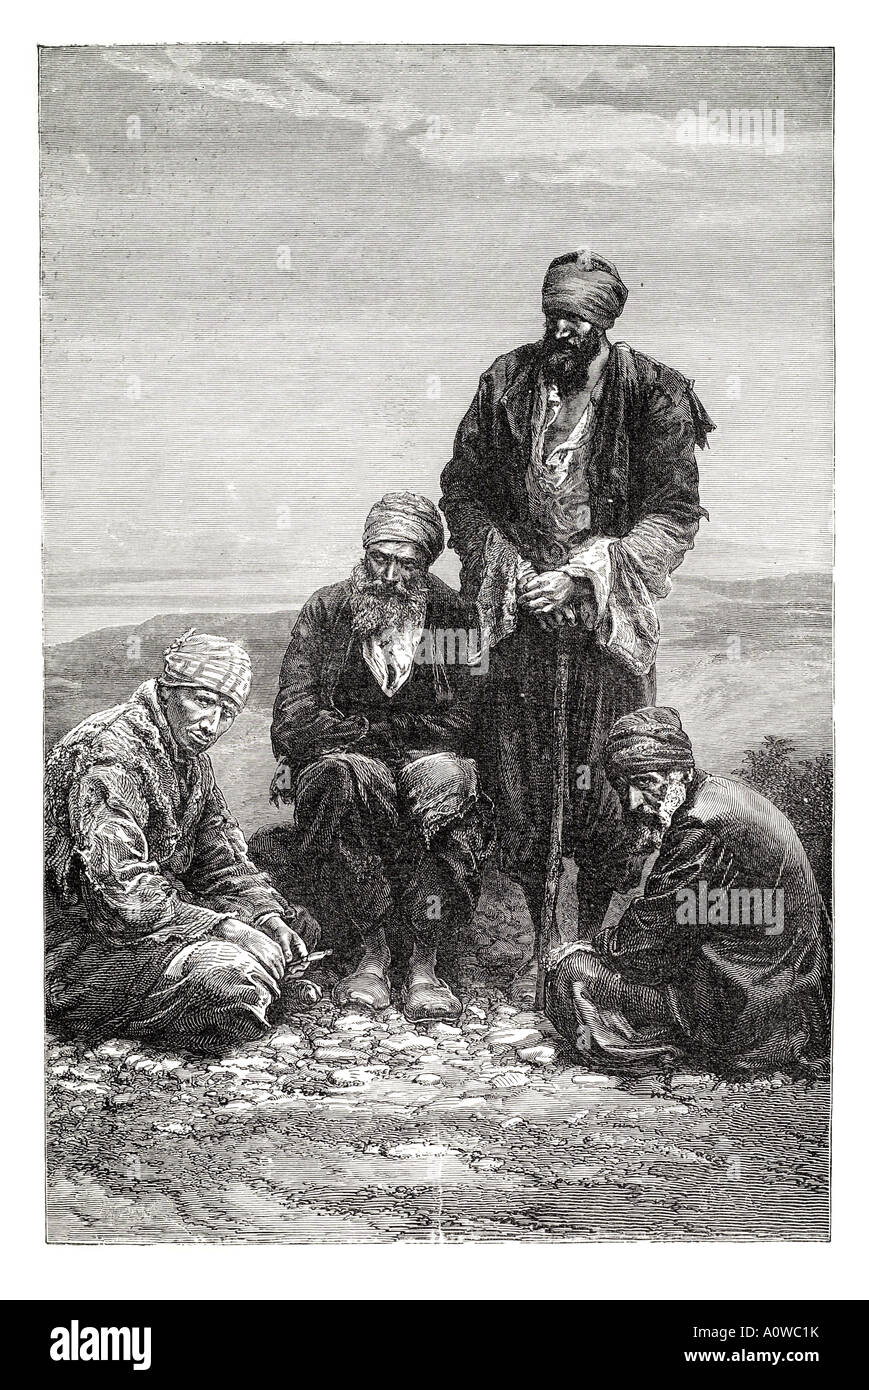 Jew Jewish Mesopotamia itinerant old men beard Syria middle east trade desert arid sit sat stand talk group suspicious wary unsu Stock Photo